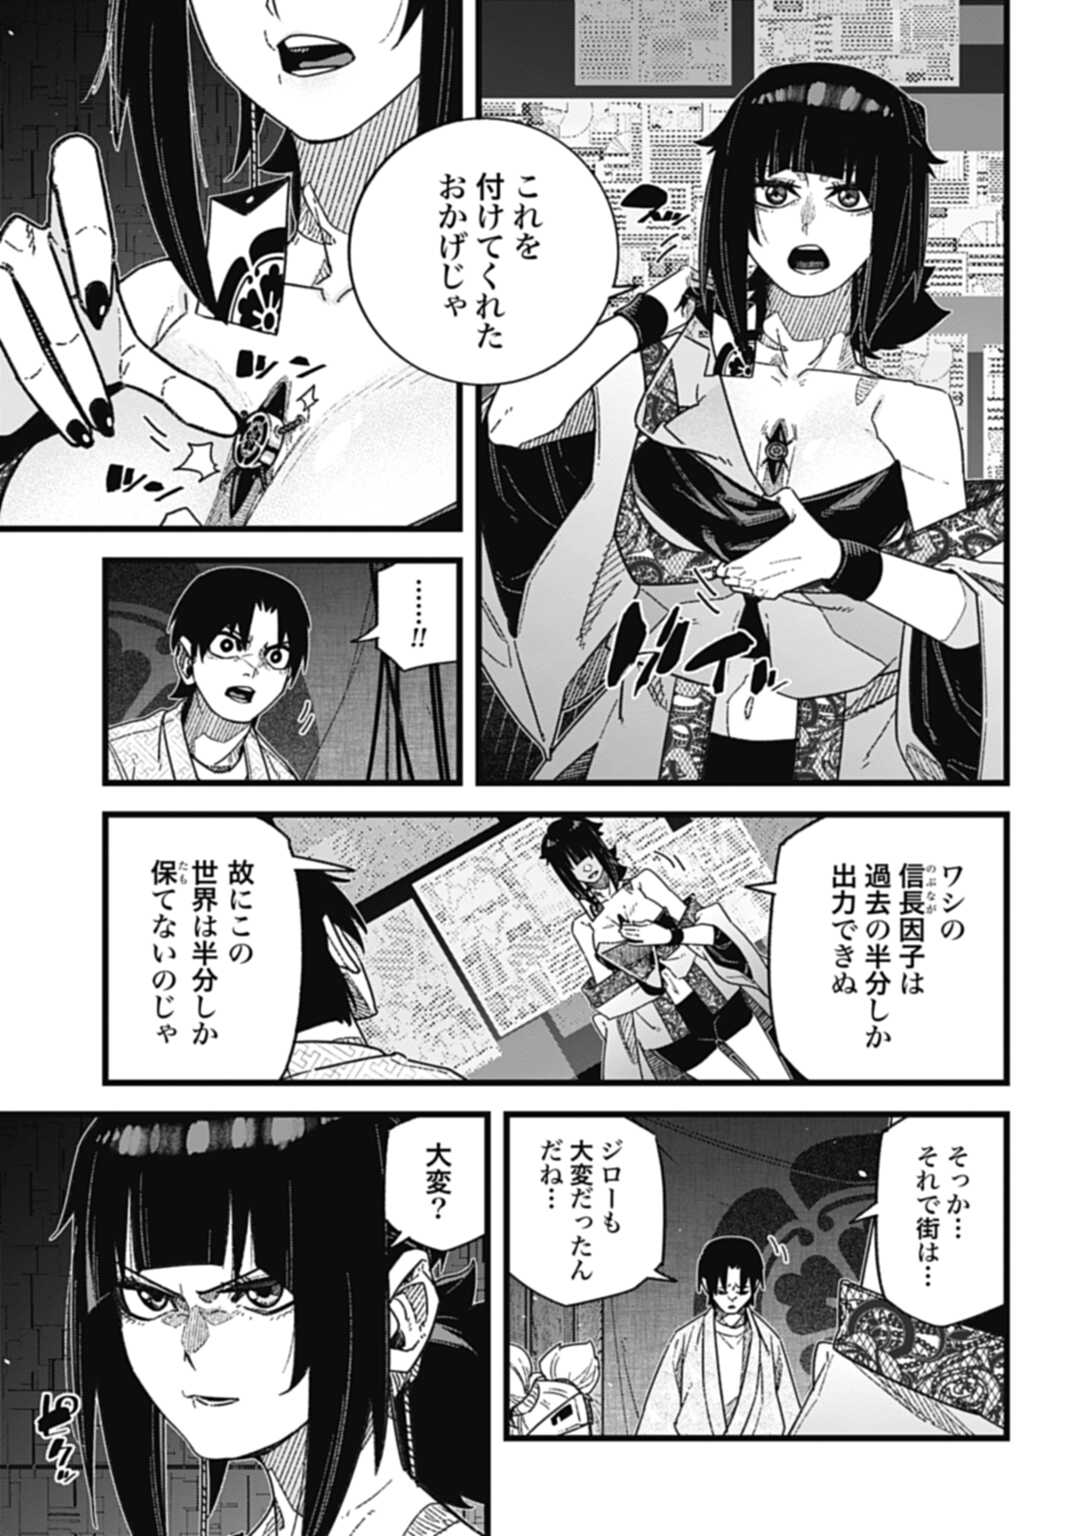 Nobunaga Multiverse - Chapter 8.3 - Page 2